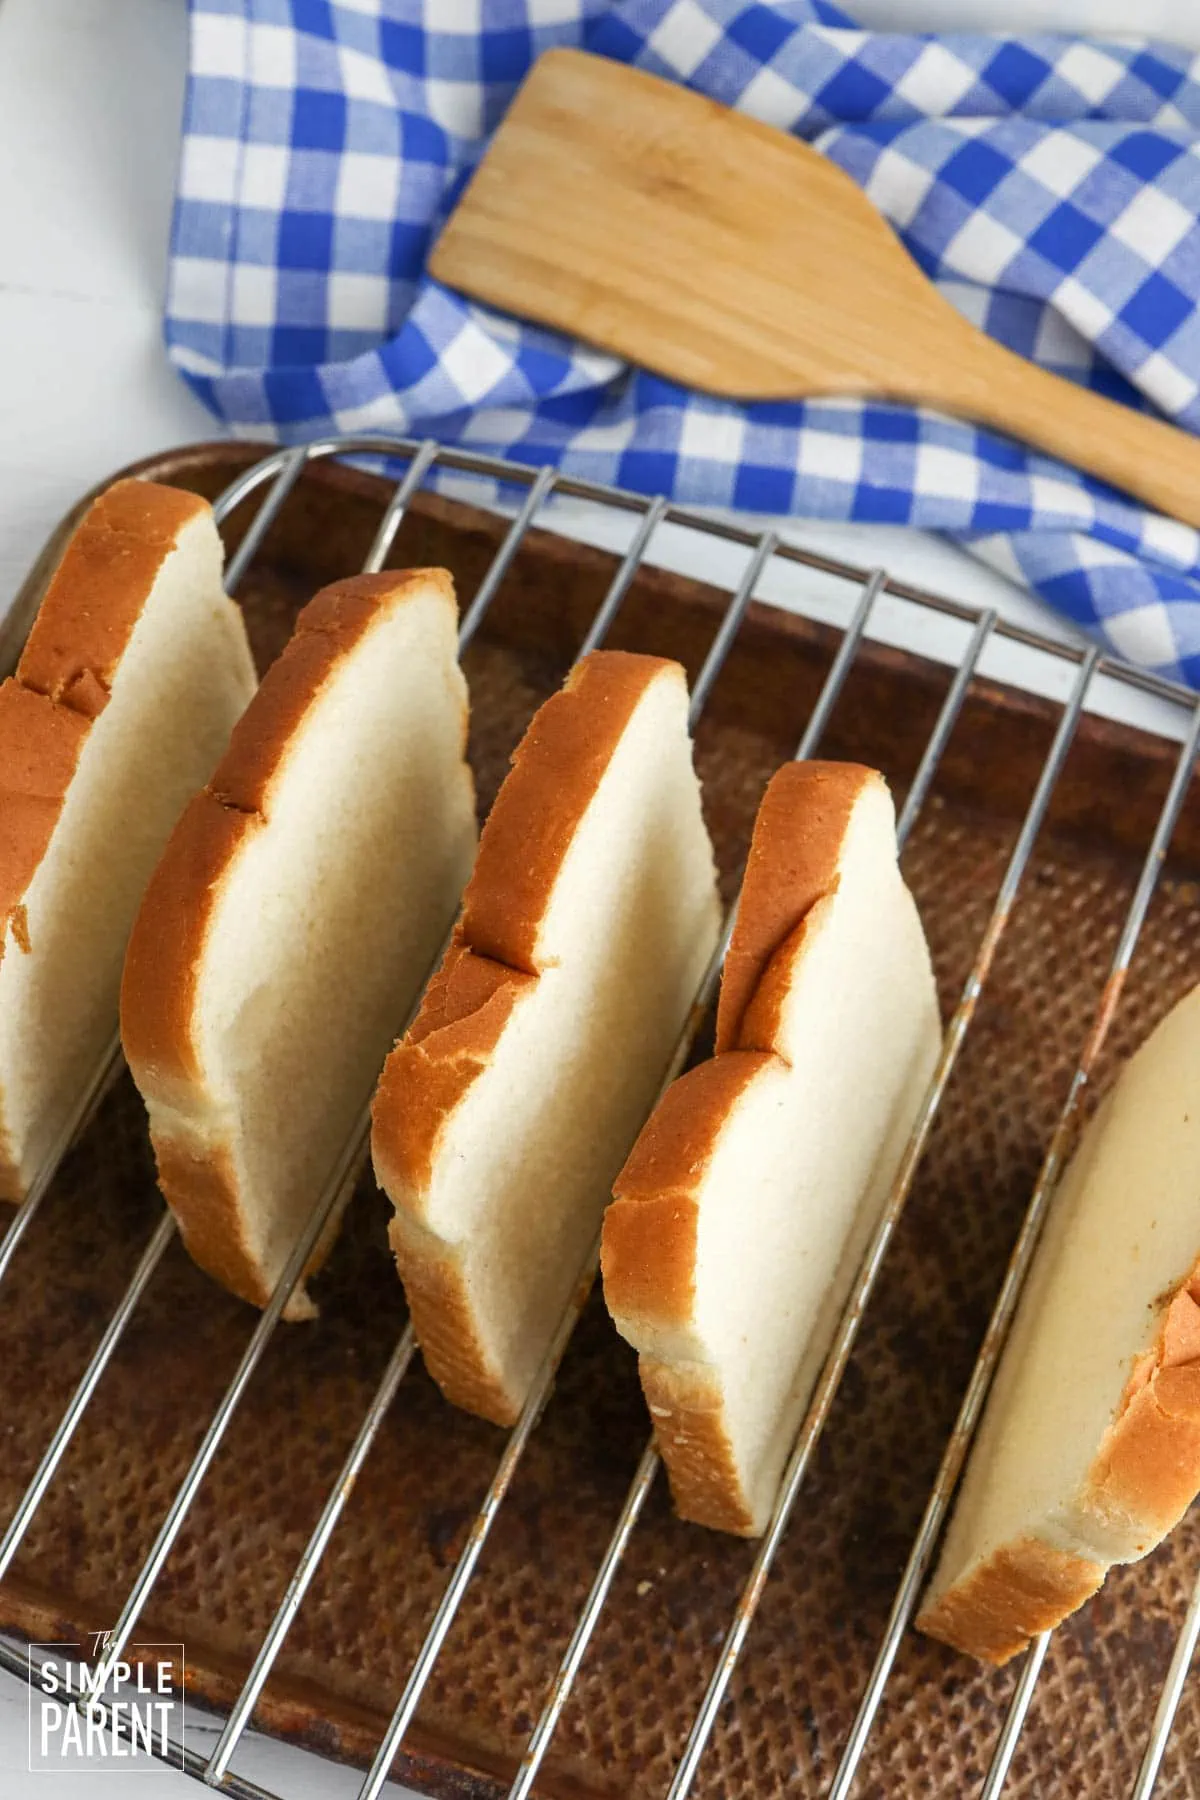 Slices of bread in roasting rack